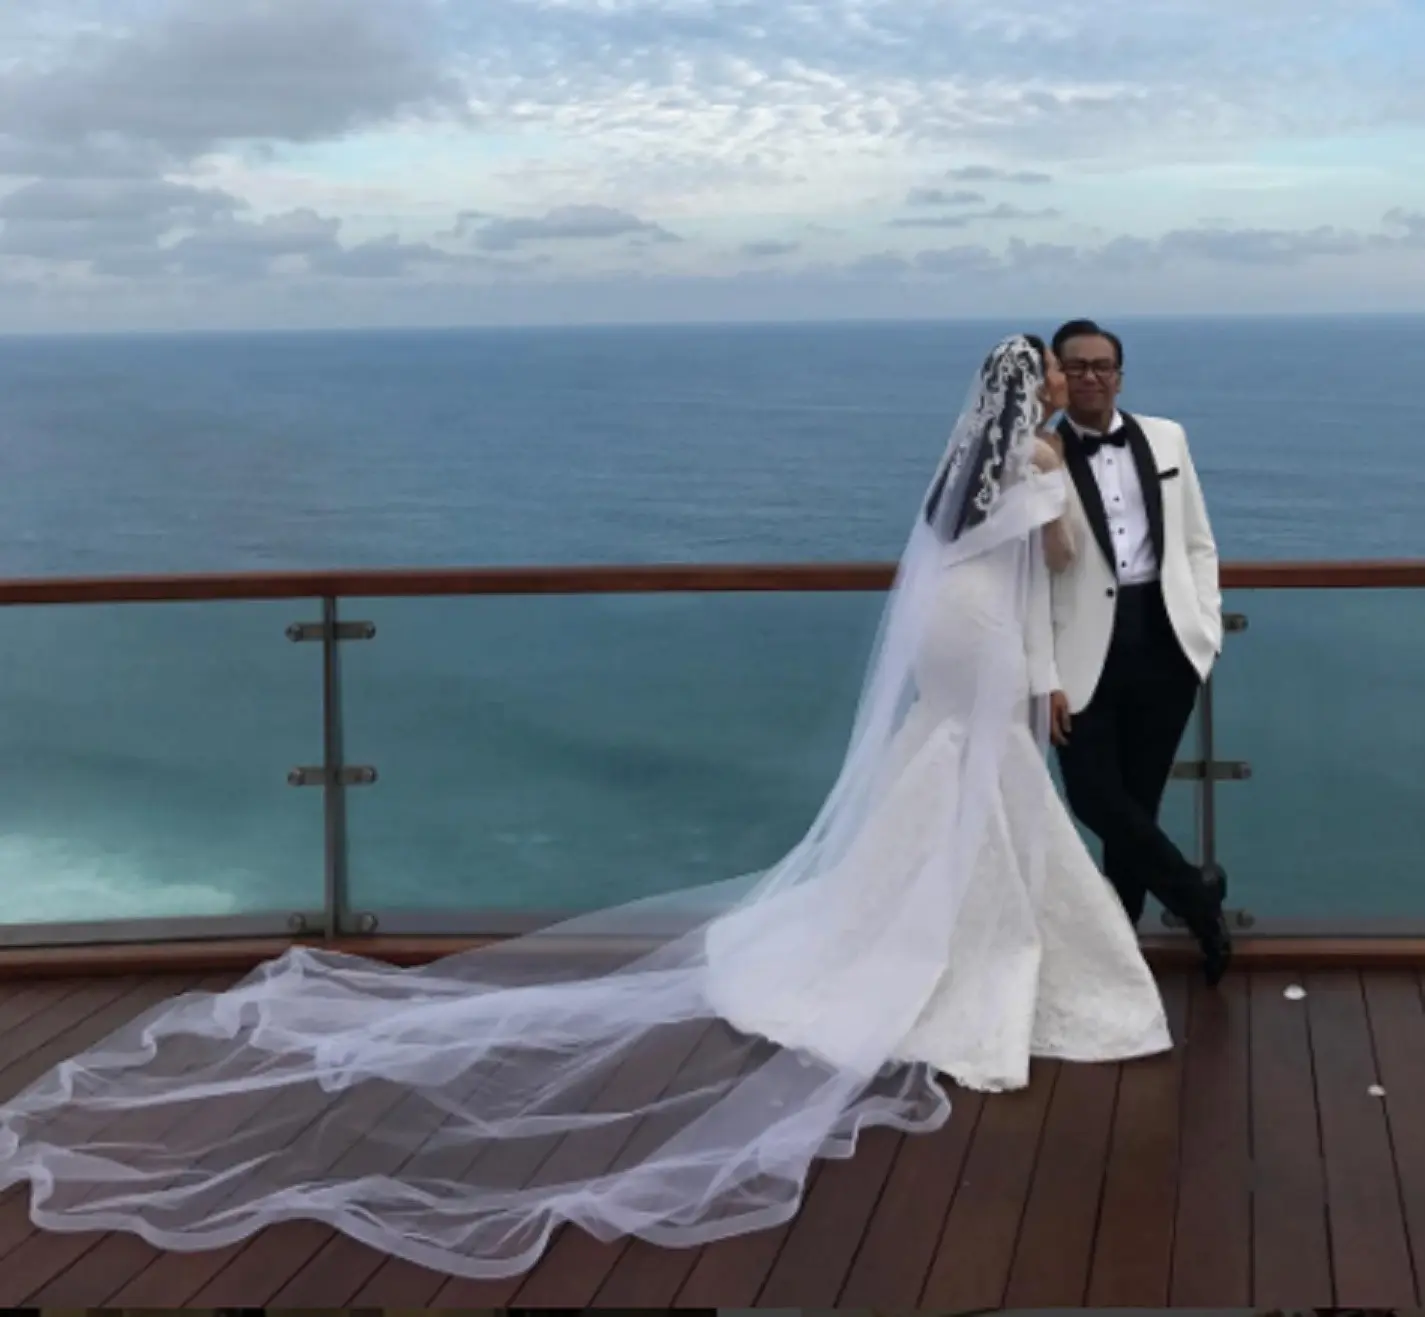 Sammy Simorangkir dan Viviane resmi menikah. Pernikahan mereka dilatarbelakangi suasana yang romantis di Bali. (Instagram @bubahalfian)